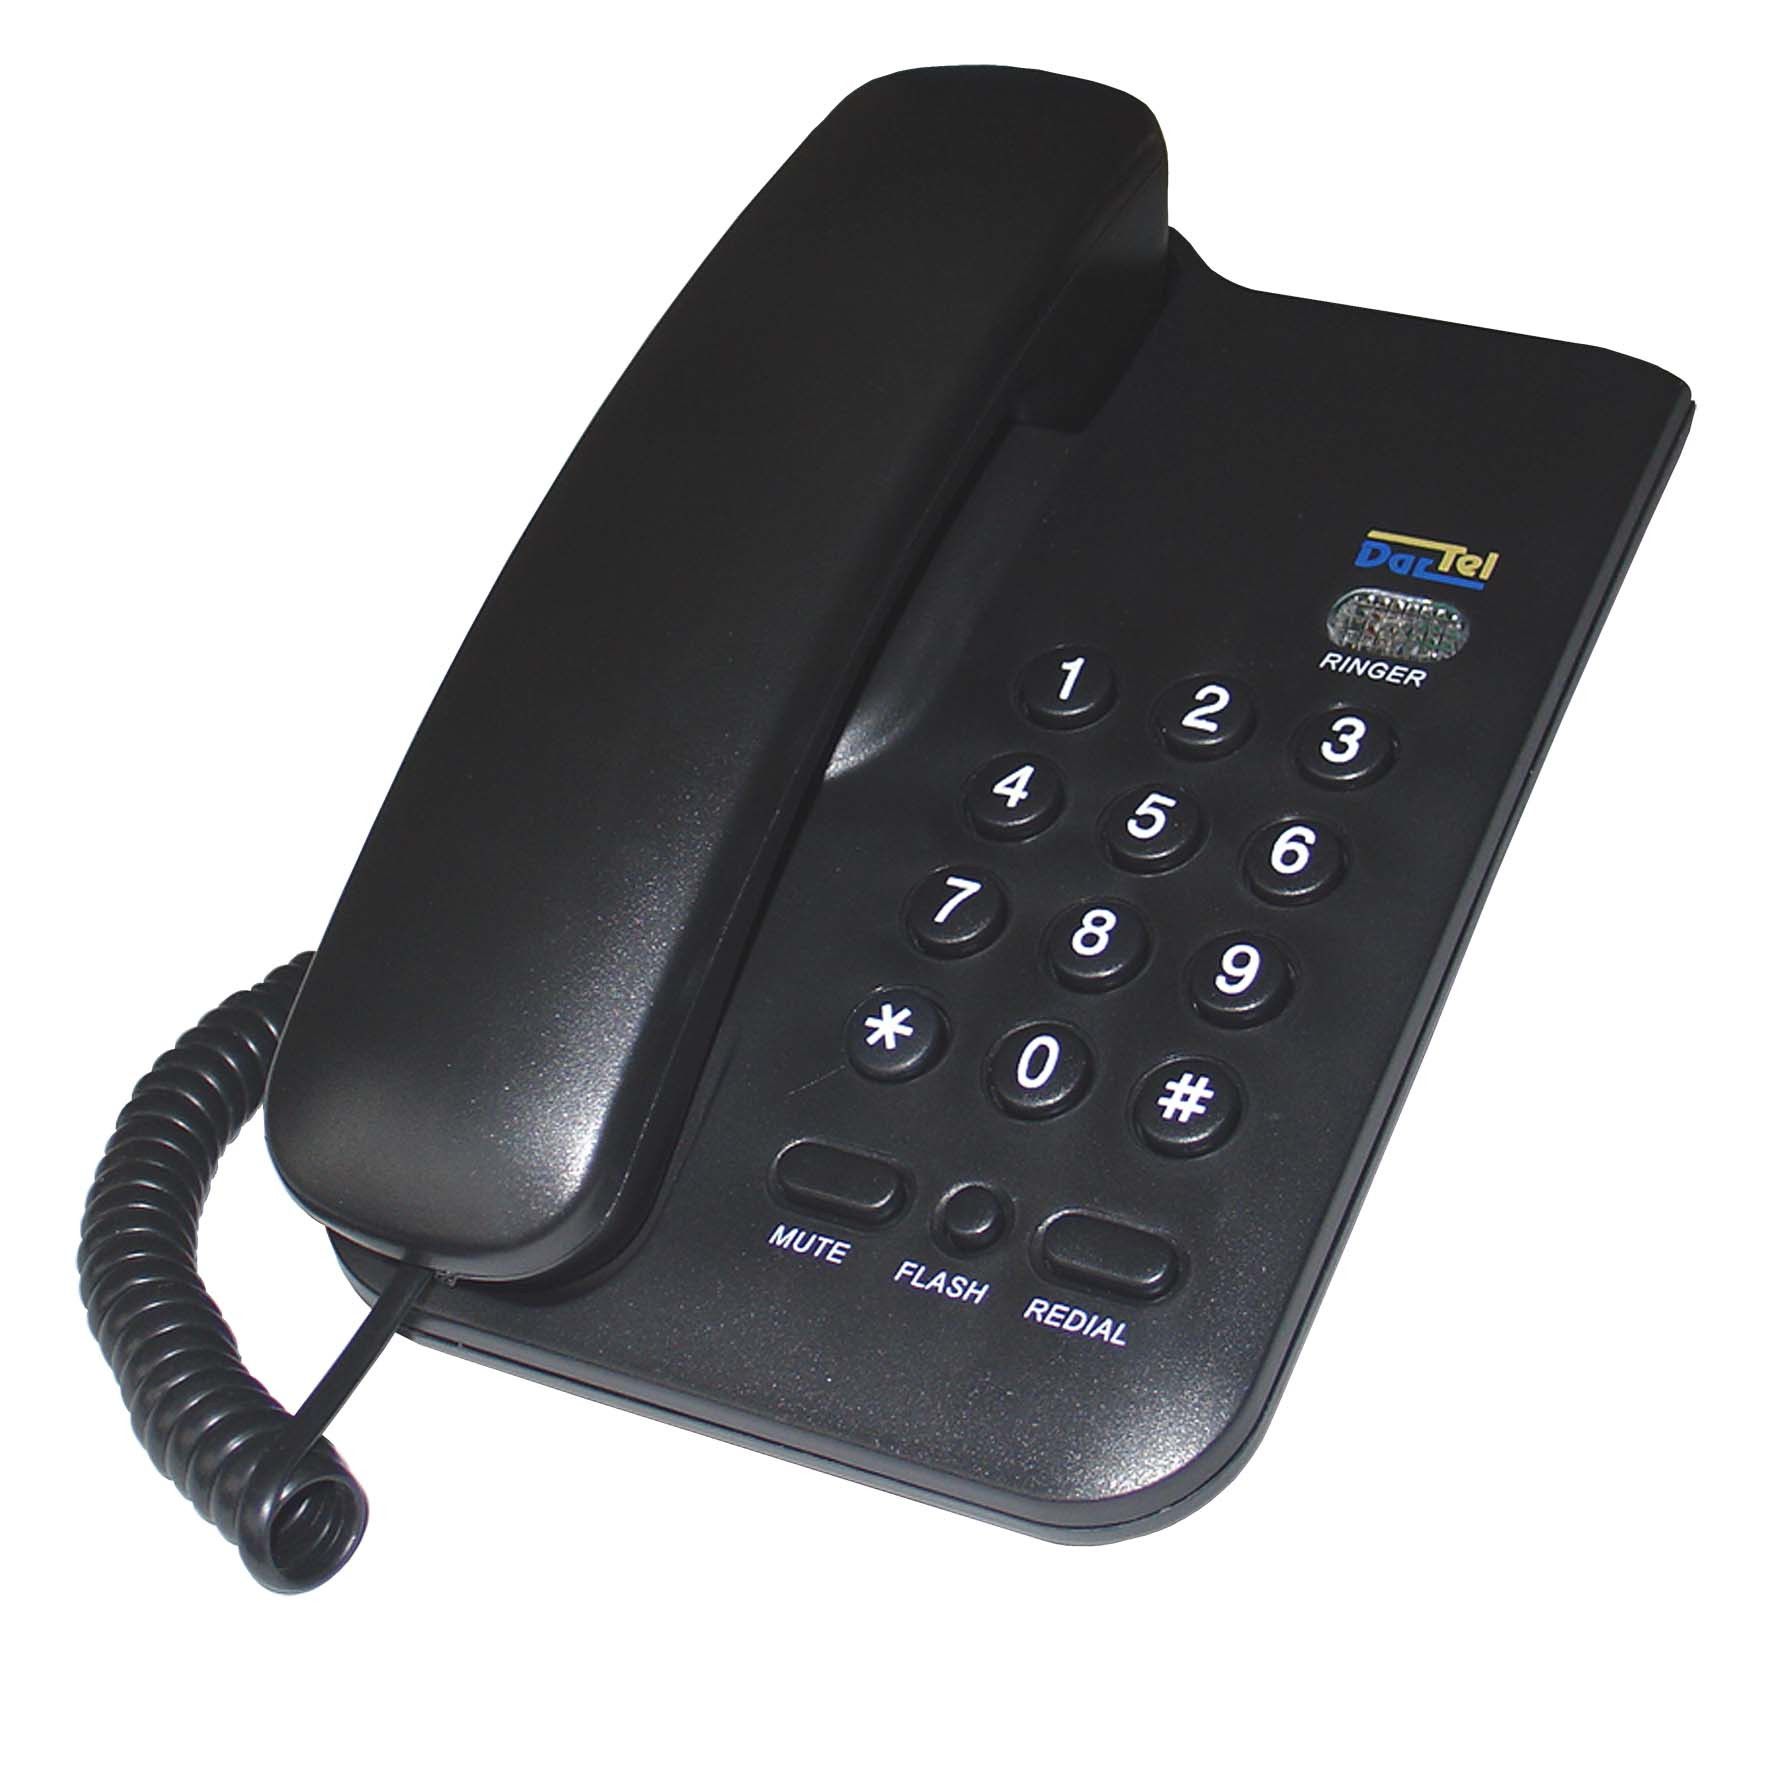 Telefon Stacjonarny Dartel LJ-68 Czarny